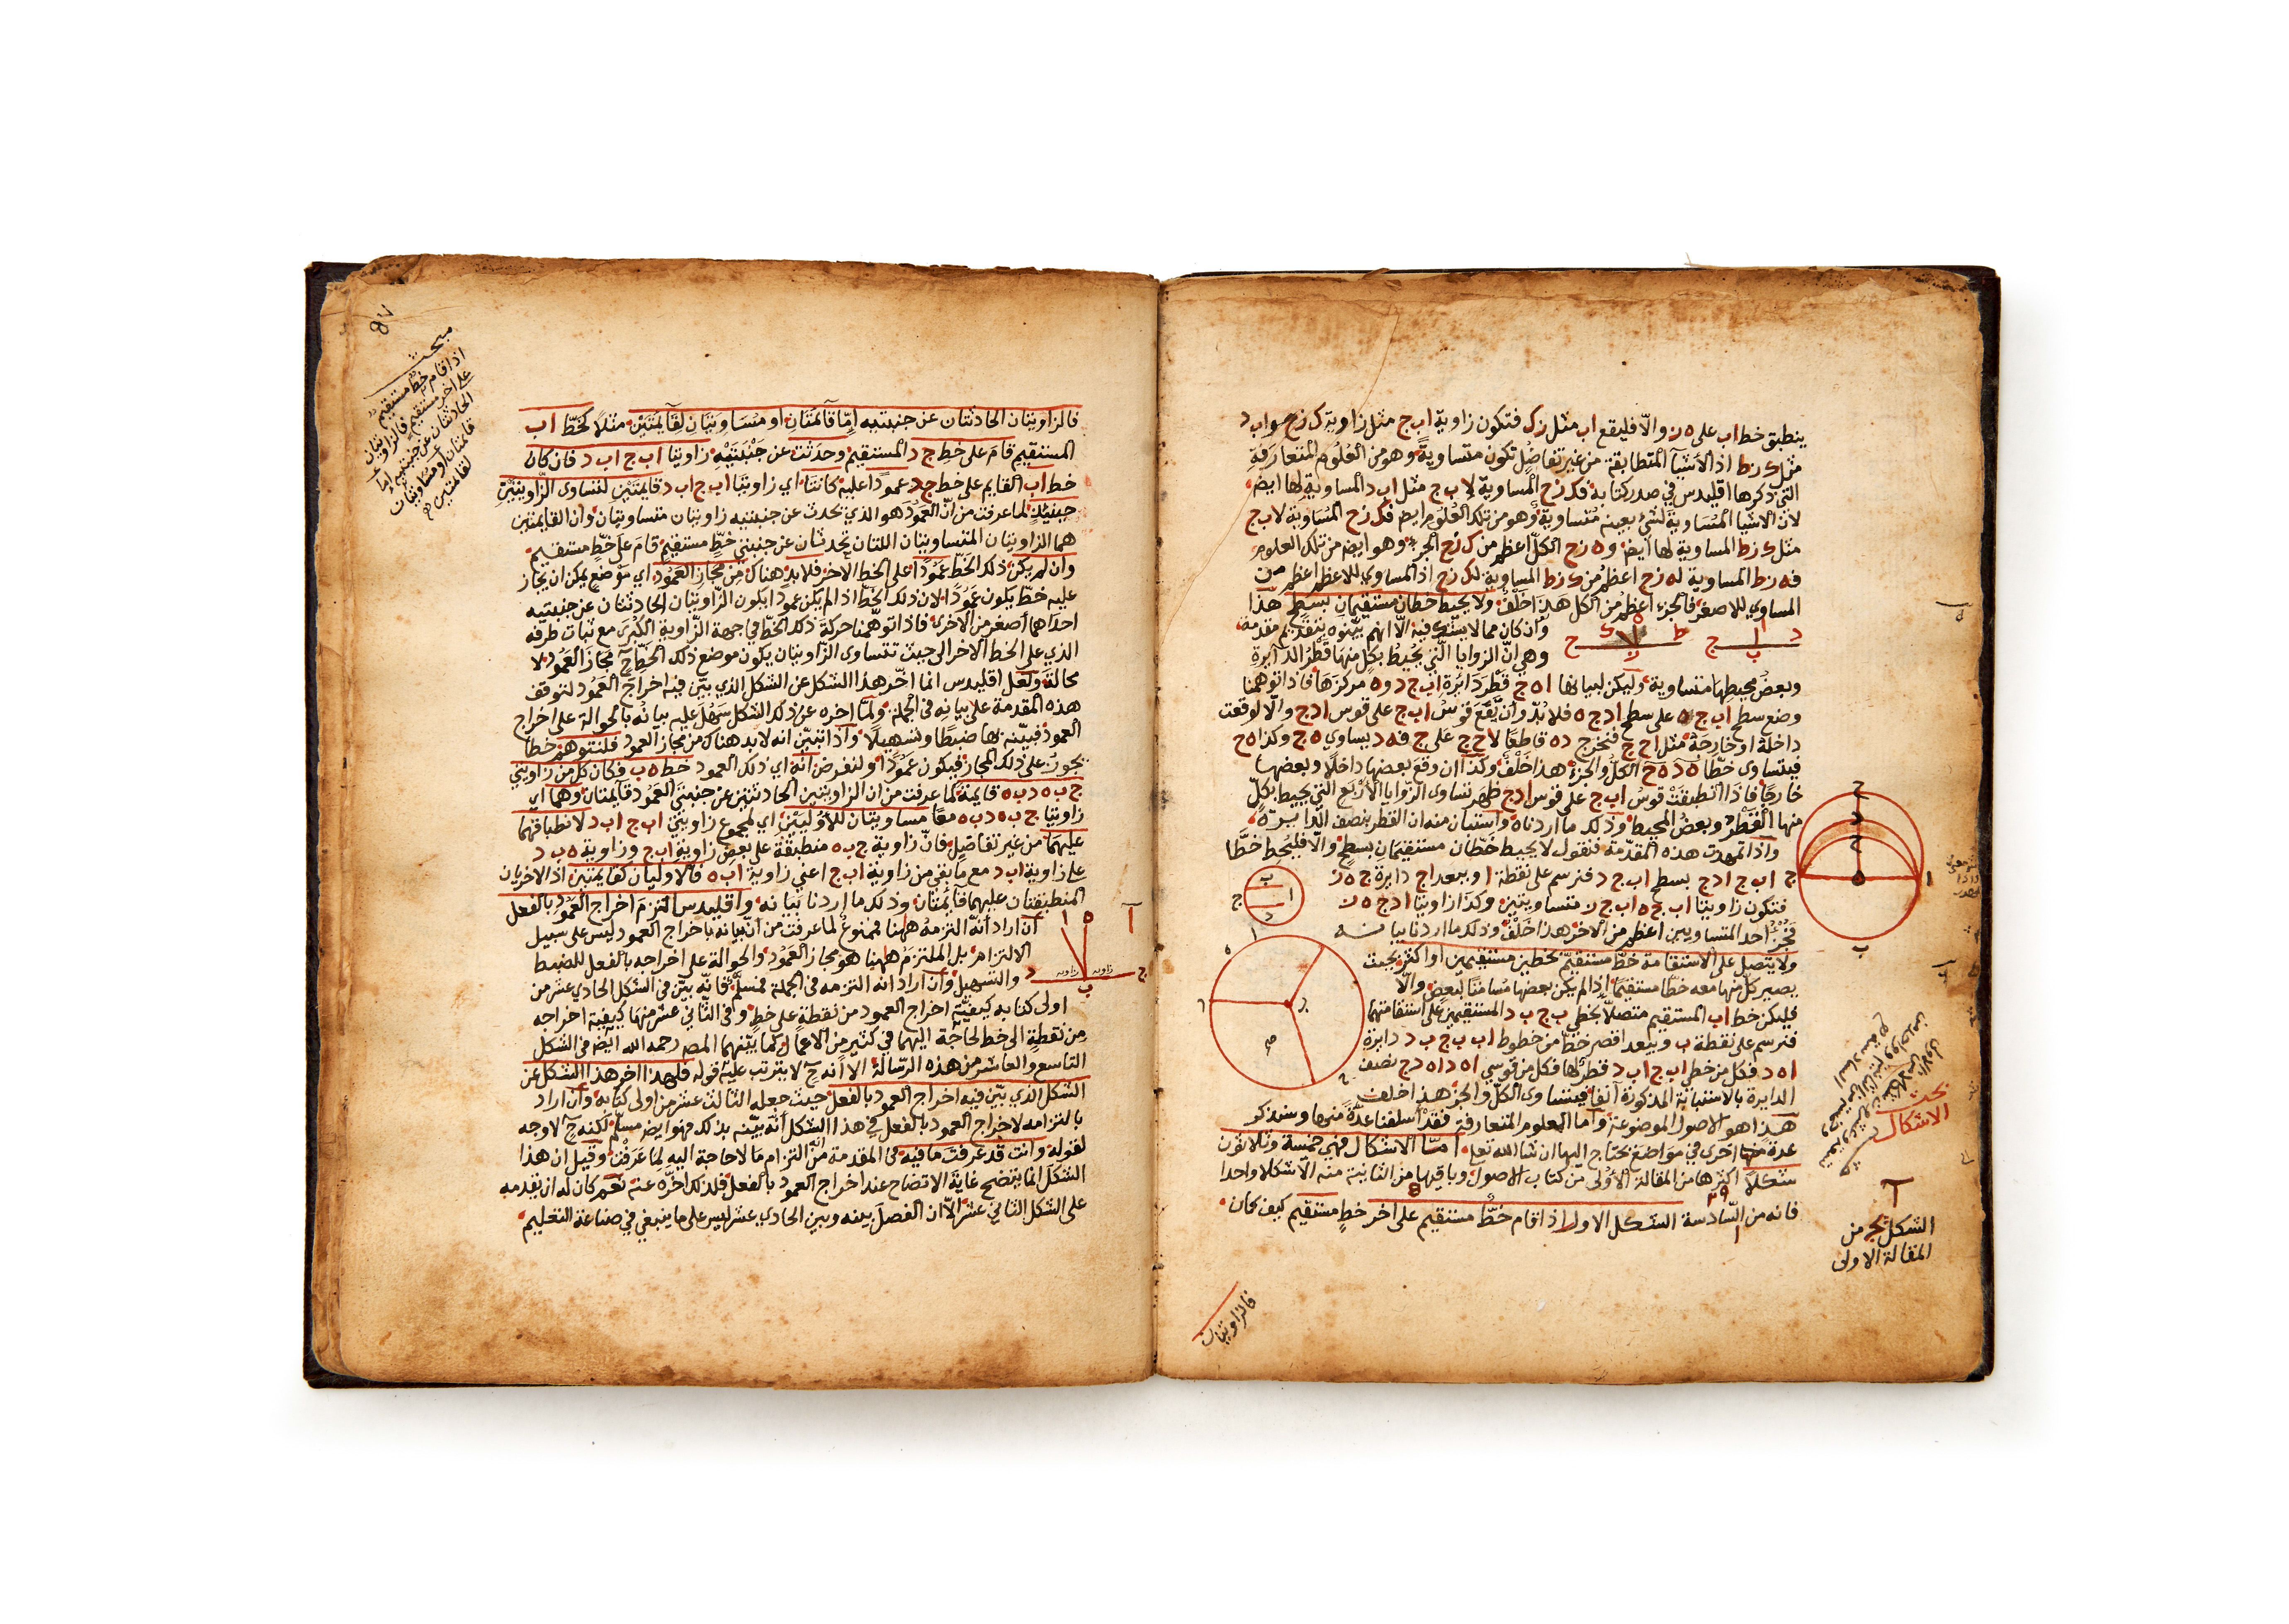 ABDUL MOUTI BIN HASSAN BIN ABDULLAH AL MEKKI, A MANUSCRIPT ABOUT GEOMETRY & MATHS, DATED 983AH - Image 13 of 16